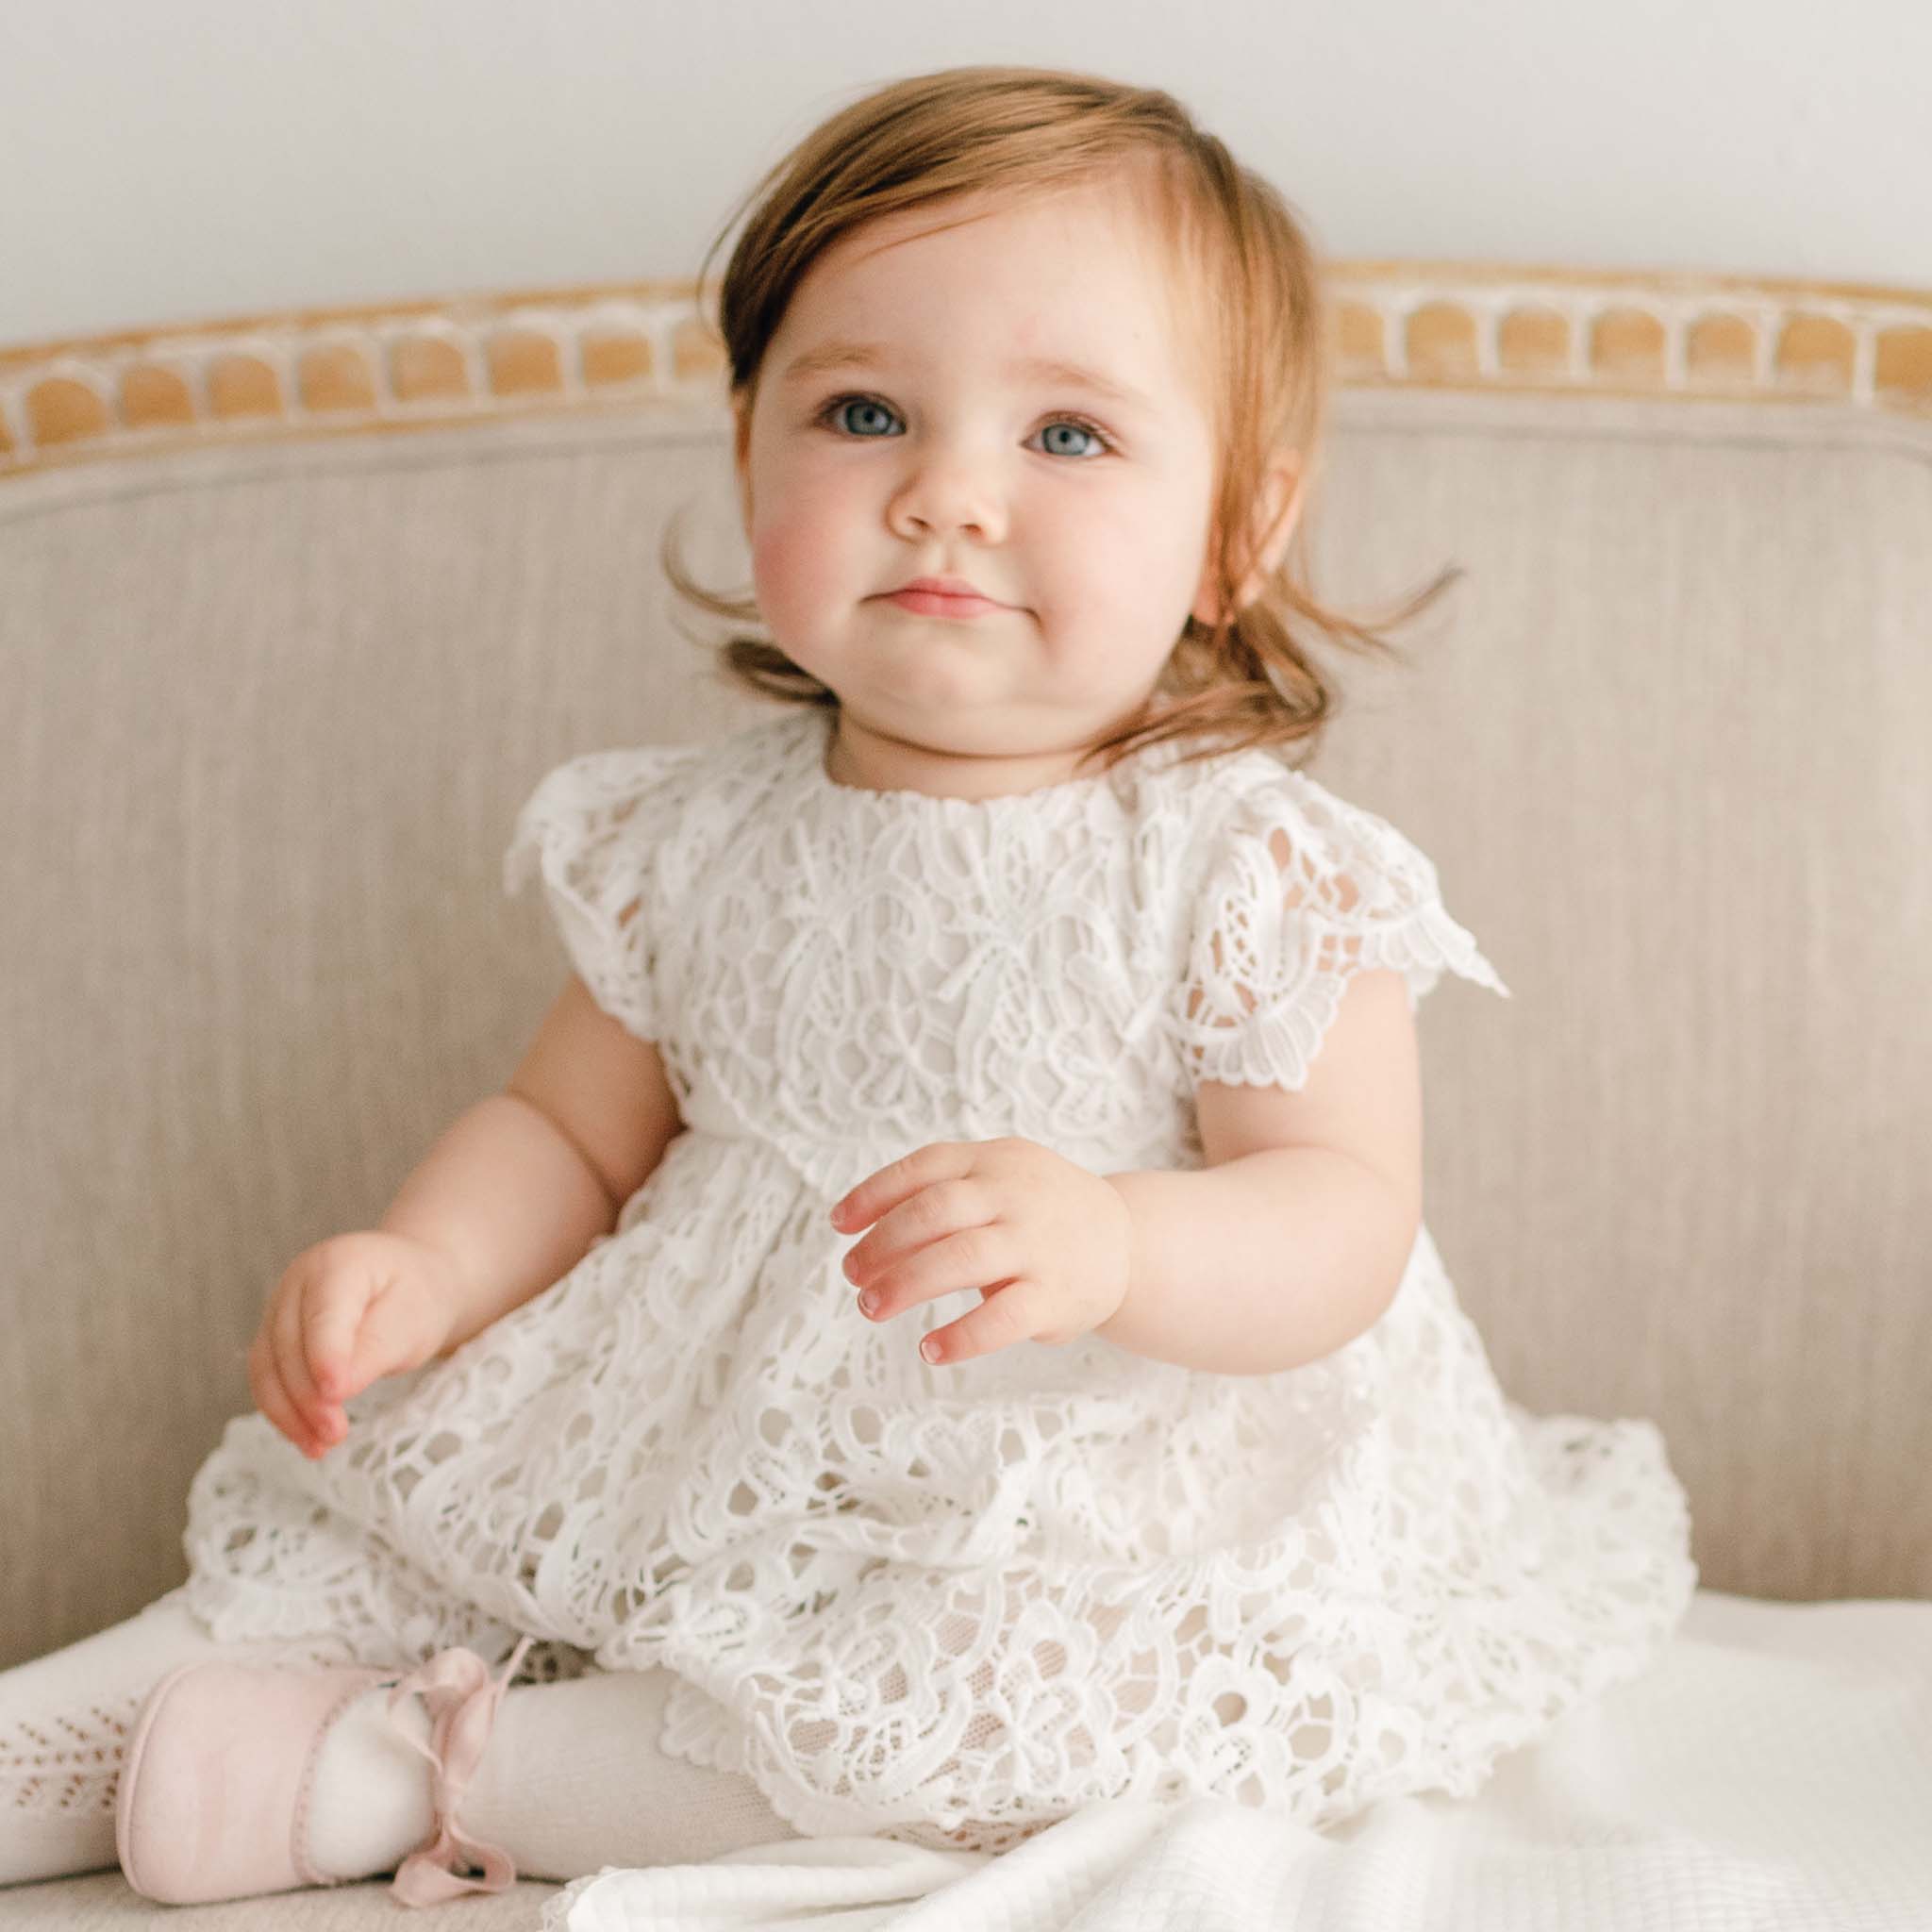 infant flower gowns kids clothing children| Alibaba.com